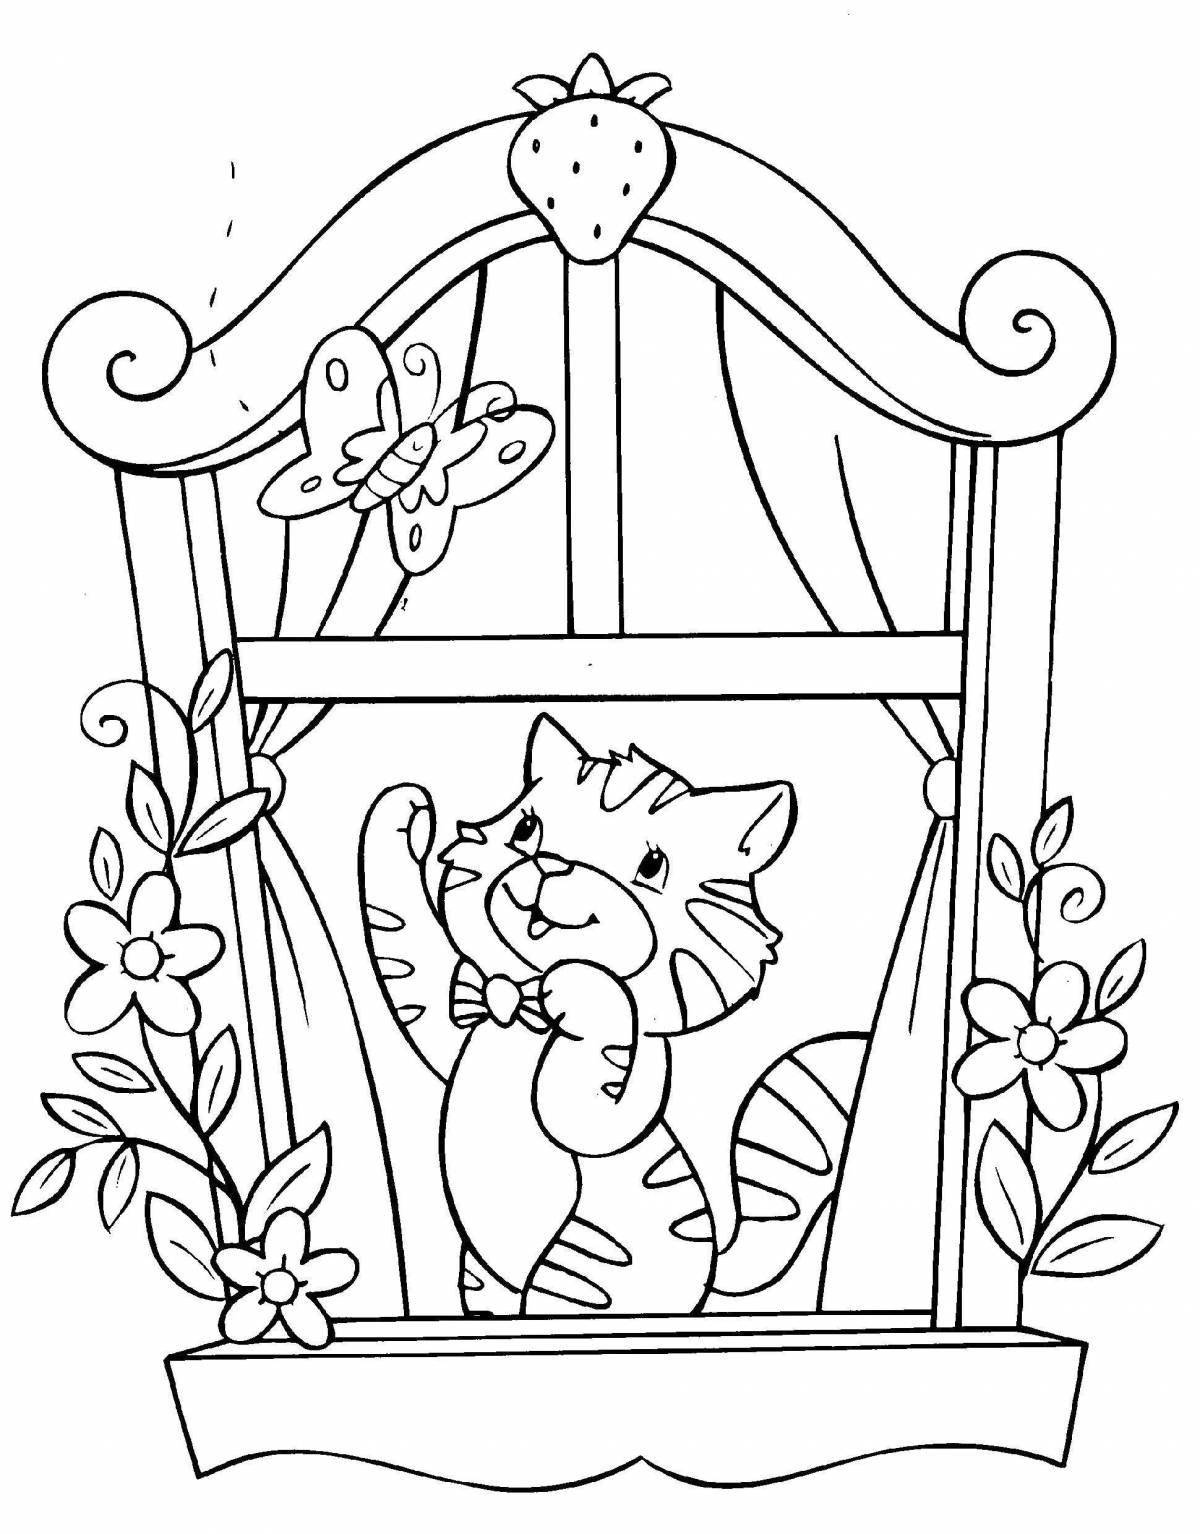 Joyful wooden cat coloring book